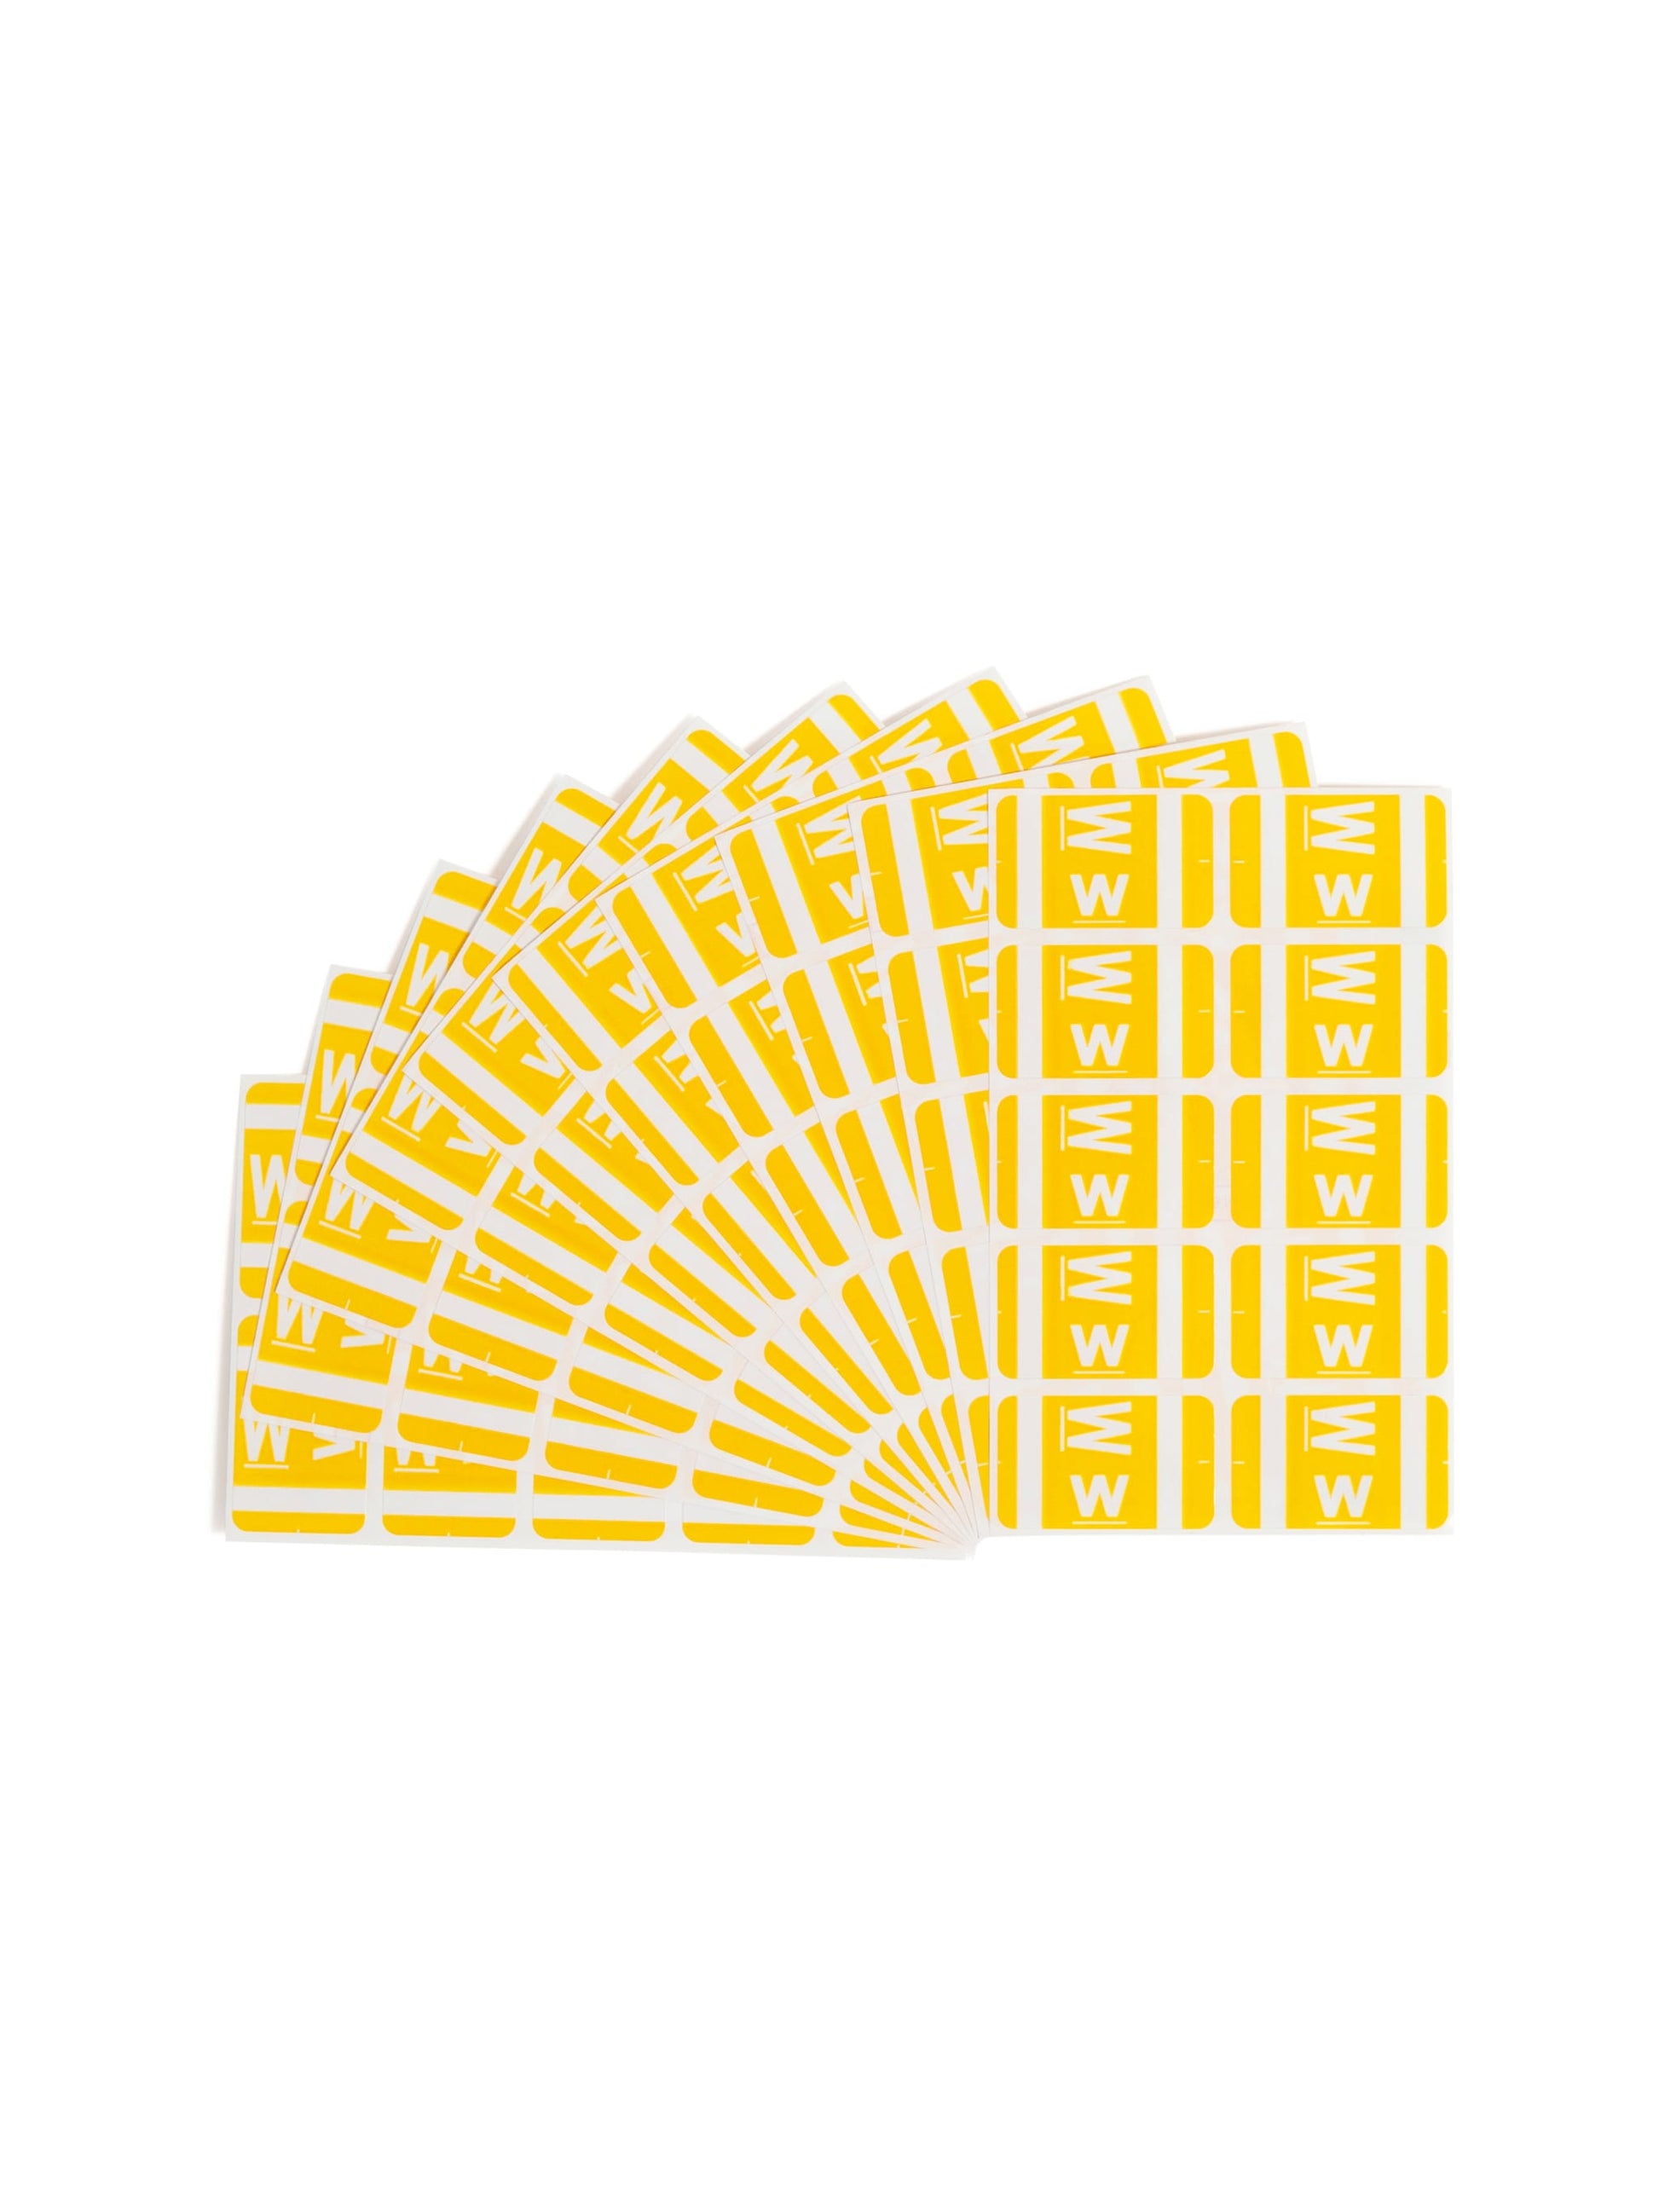 AlphaZ® ACCS Color Coded Alphabetic Labels - Sheets, Yellow Color, 1" X 1-5/8" Size, Set of 1, 086486671934